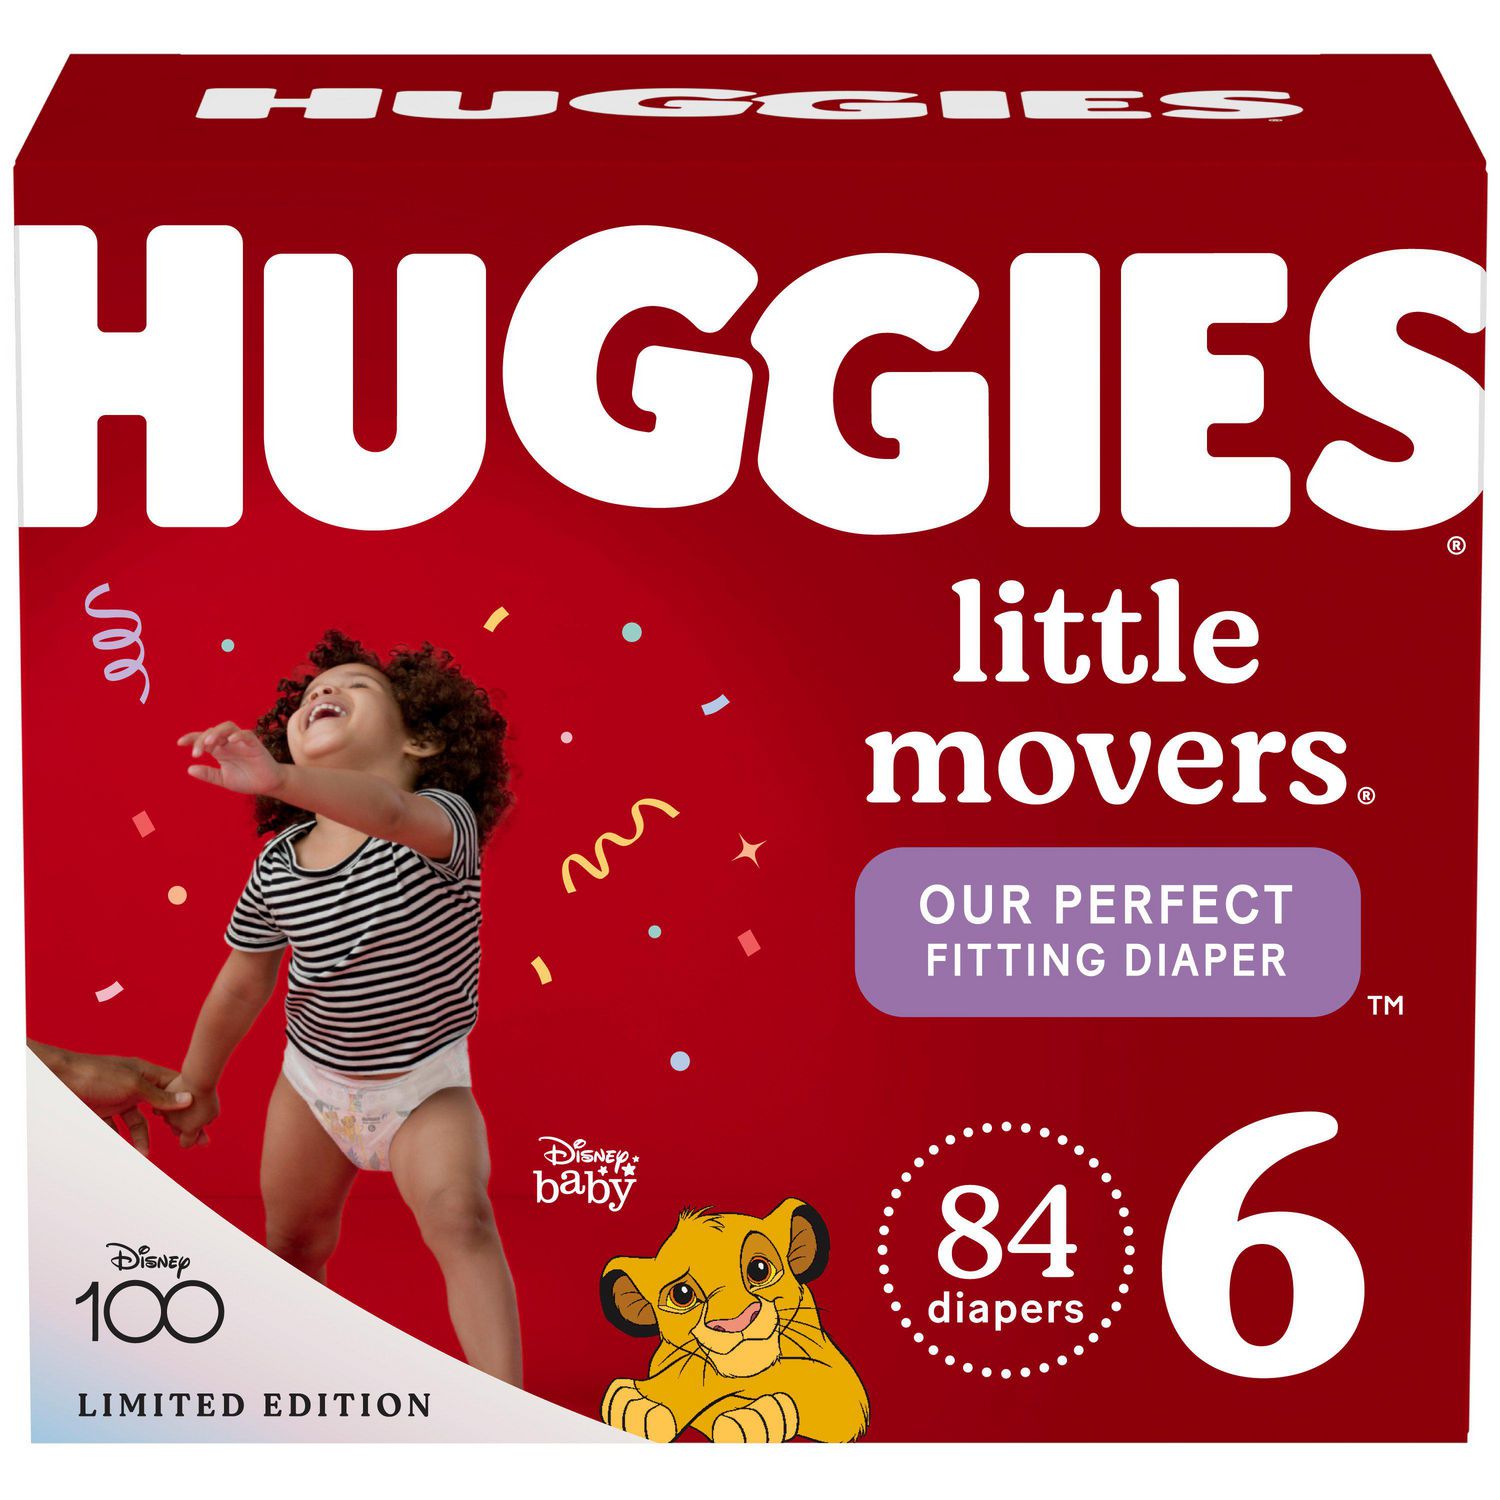 Acheter une couche Huggies Little Swimmers taille 2-3 (12 pcs)